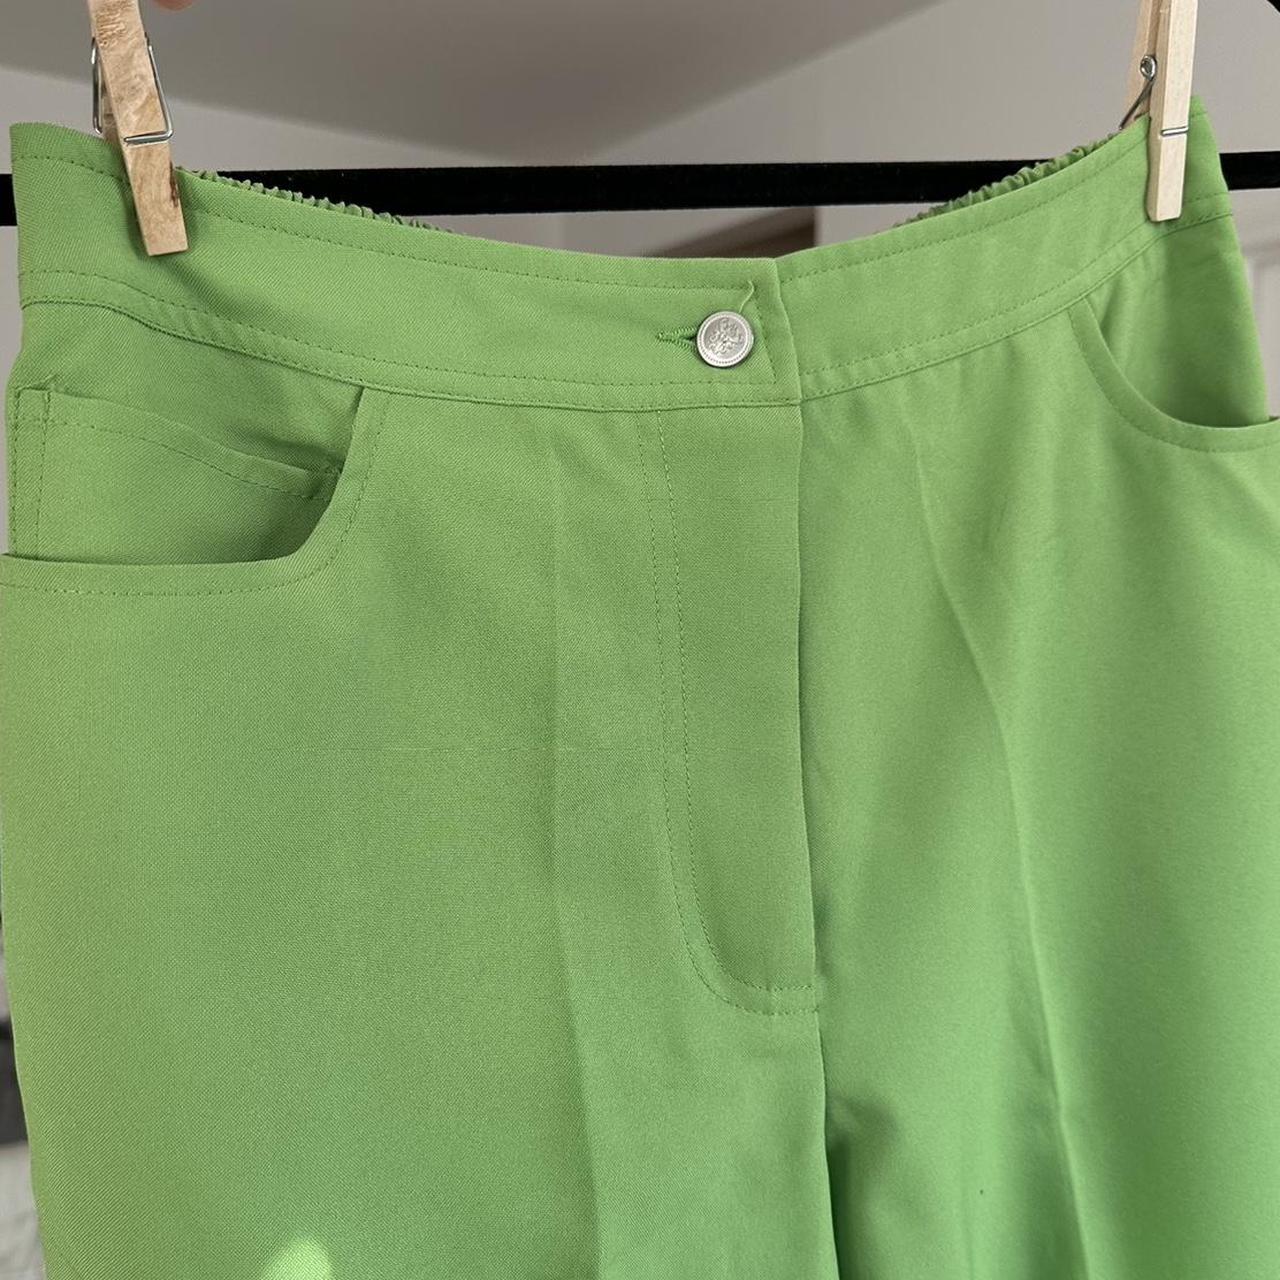 blair lime green pants. vintage. elastic waist, high... - Depop